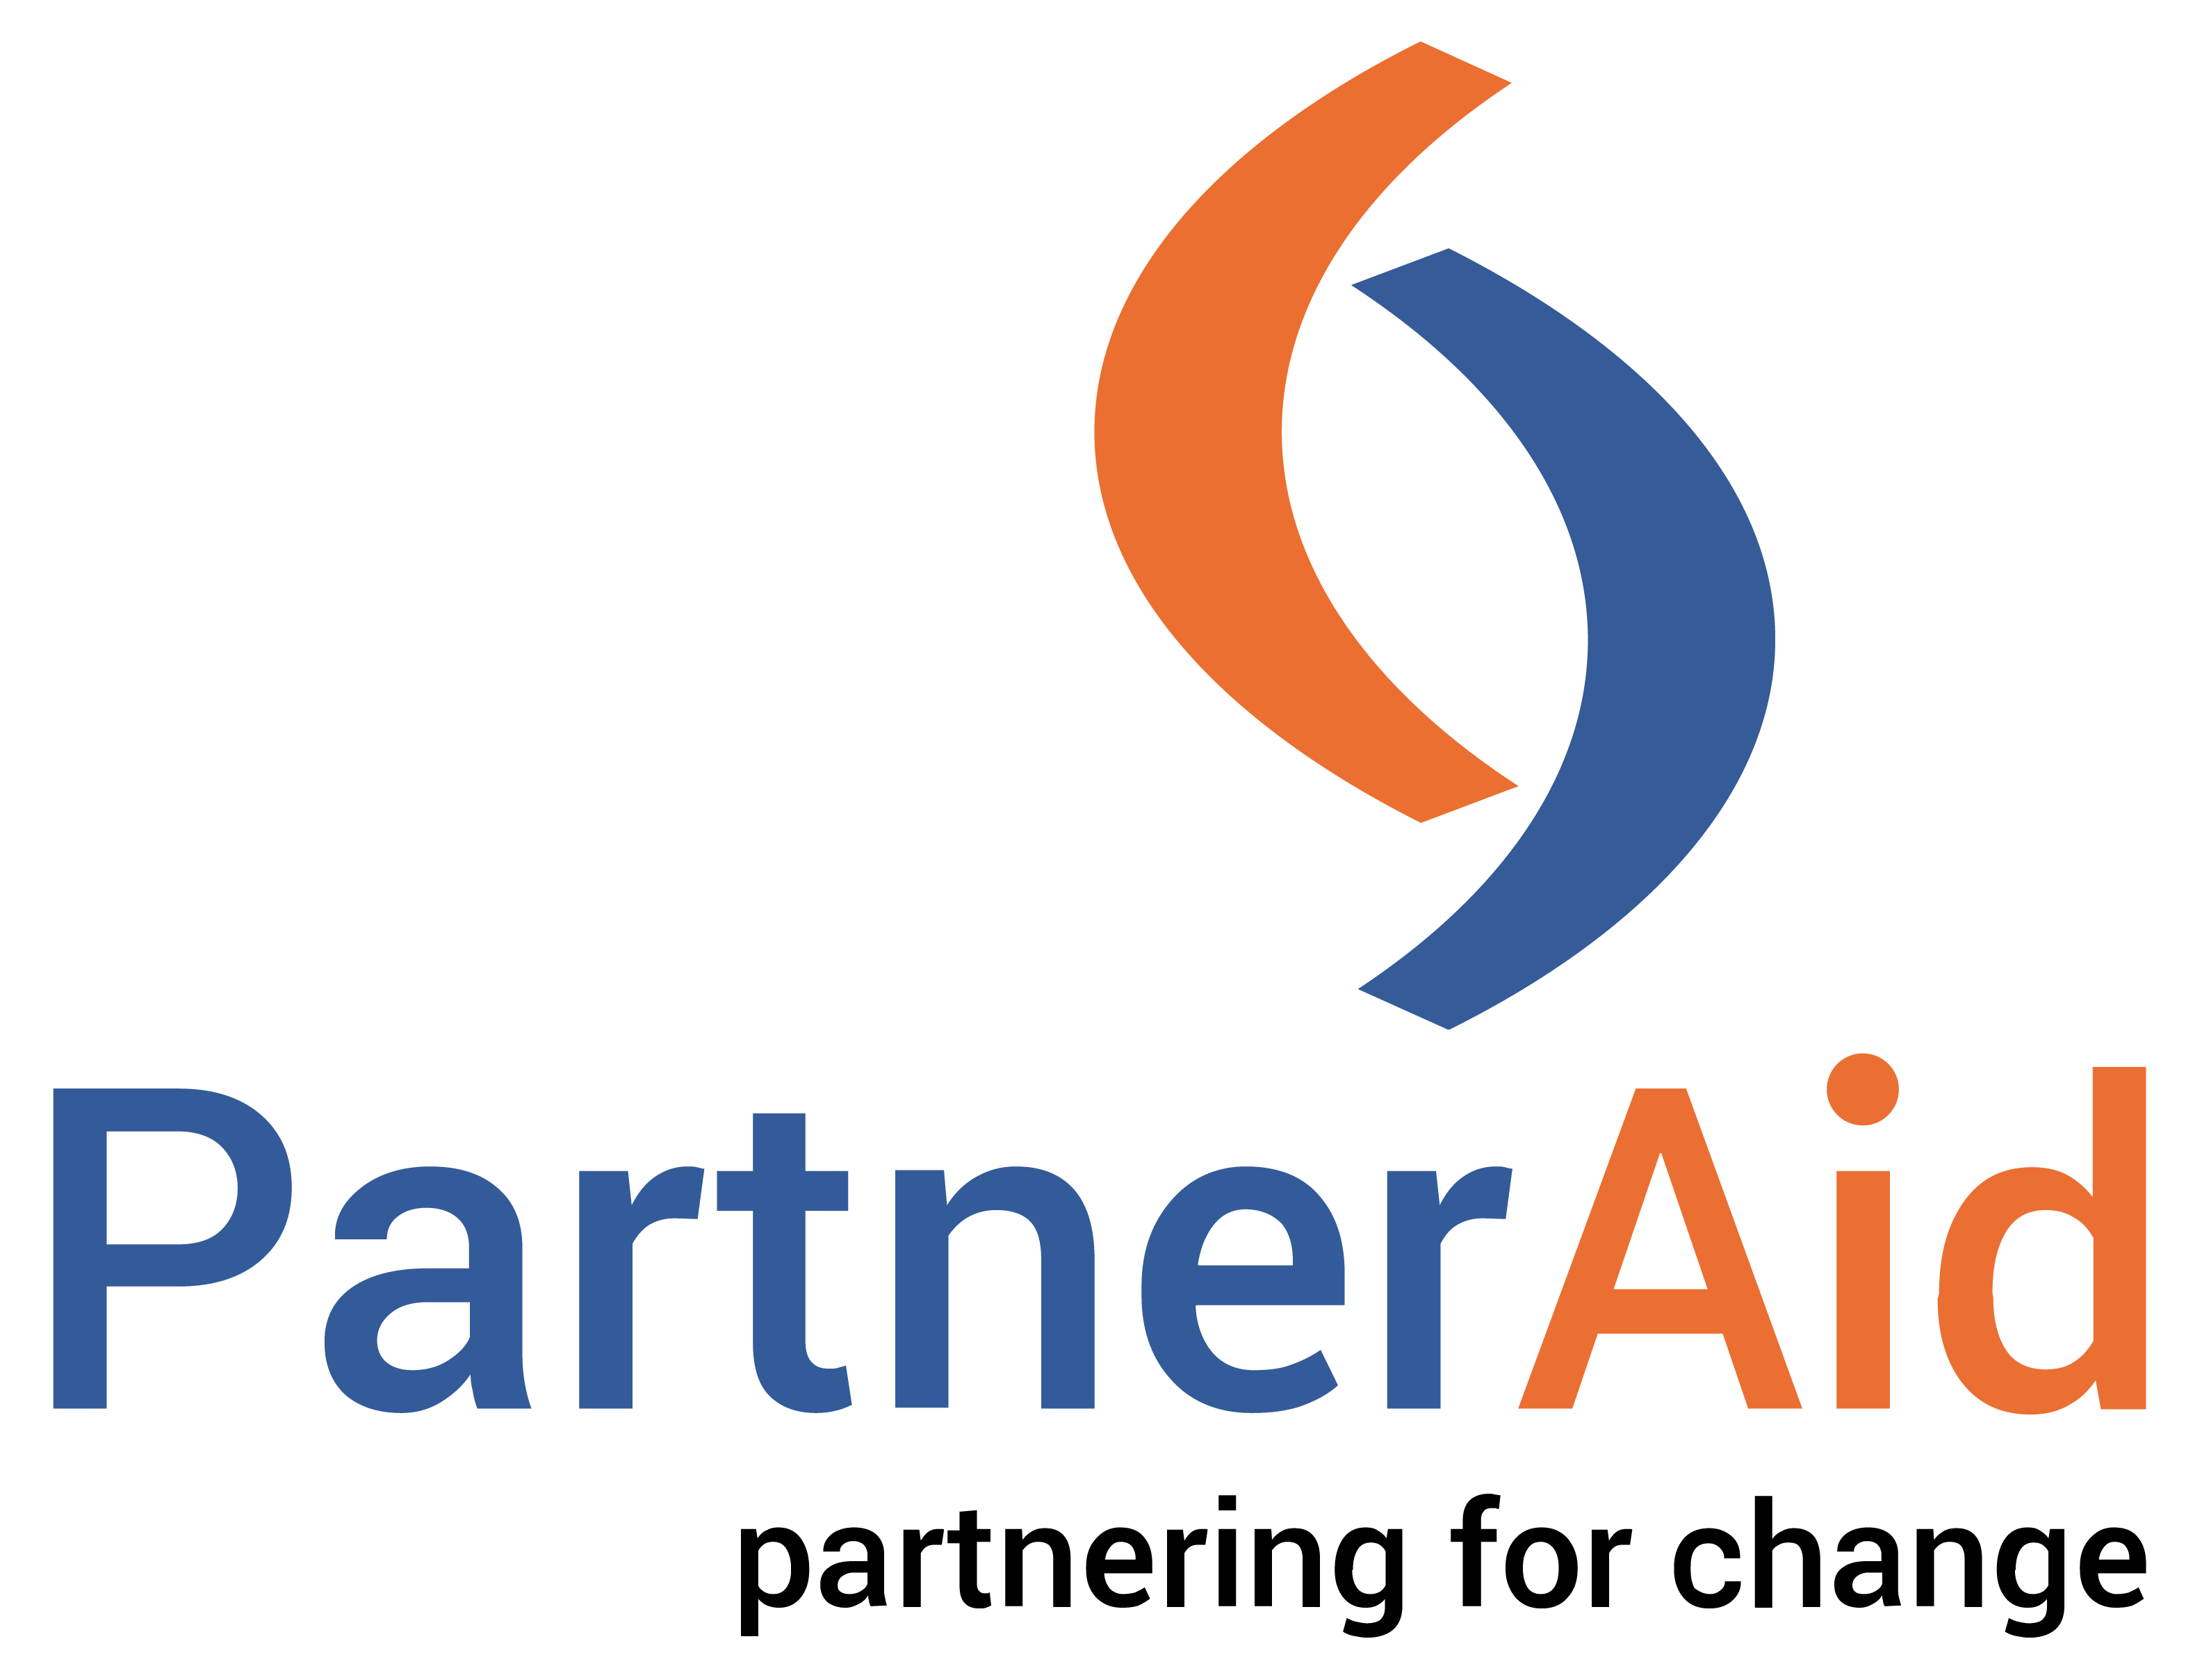 09_Partner Aid Logo